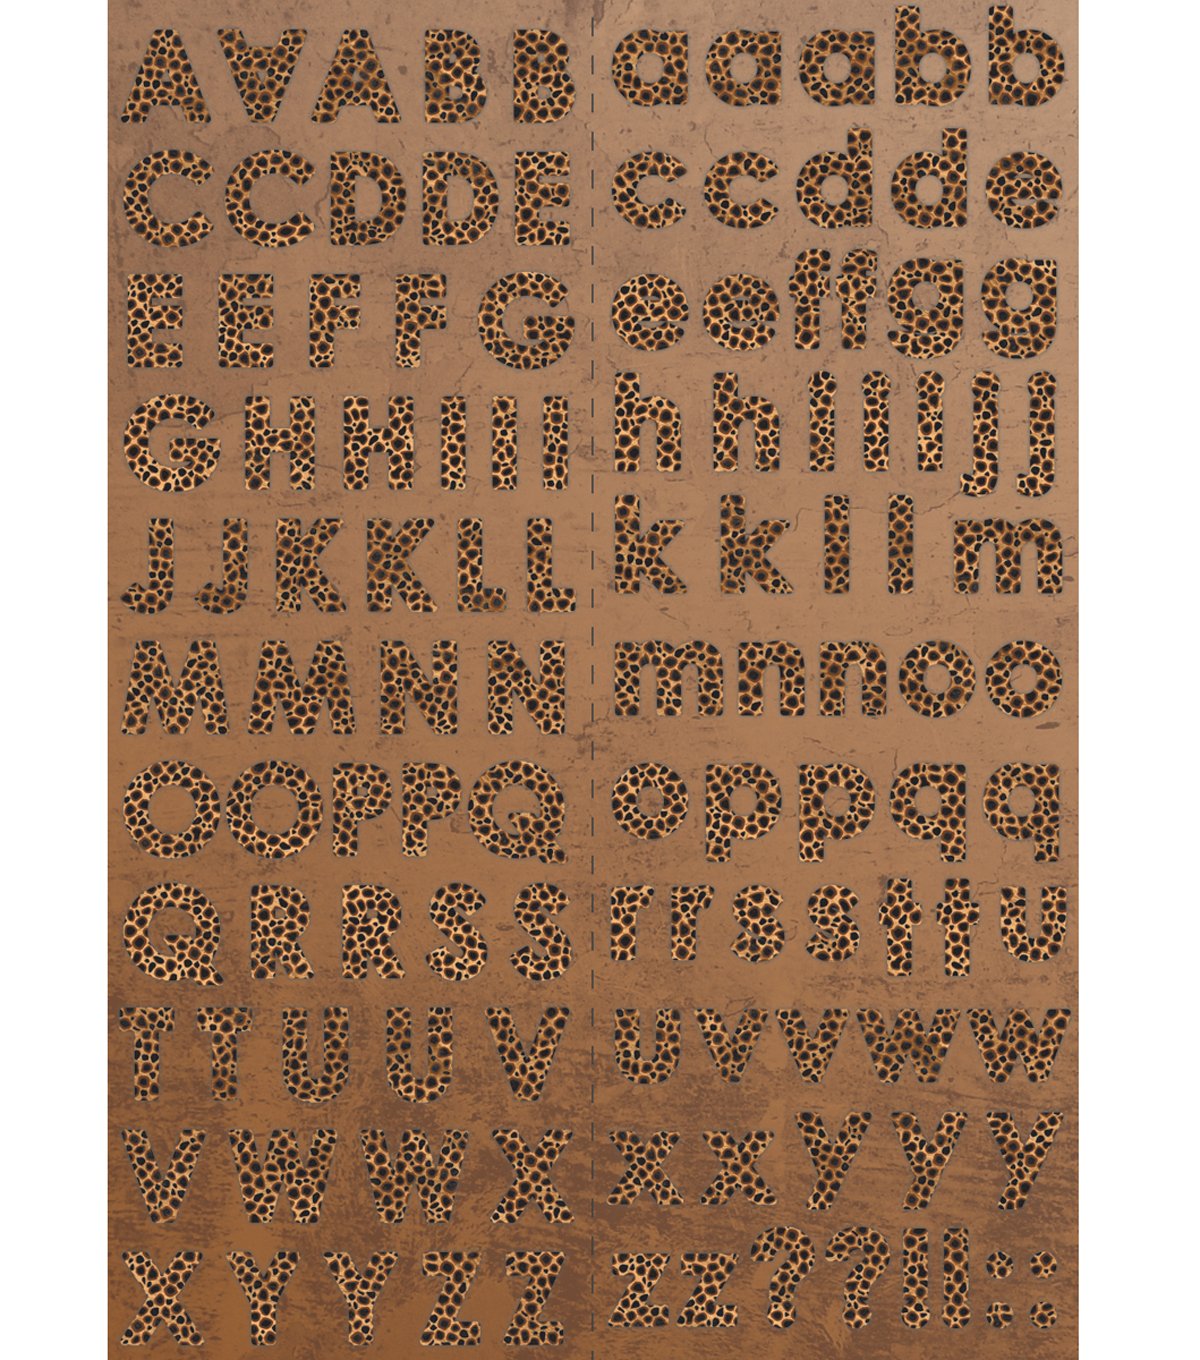 Leopard Print Alphabet Stickers Safari by Reminisce